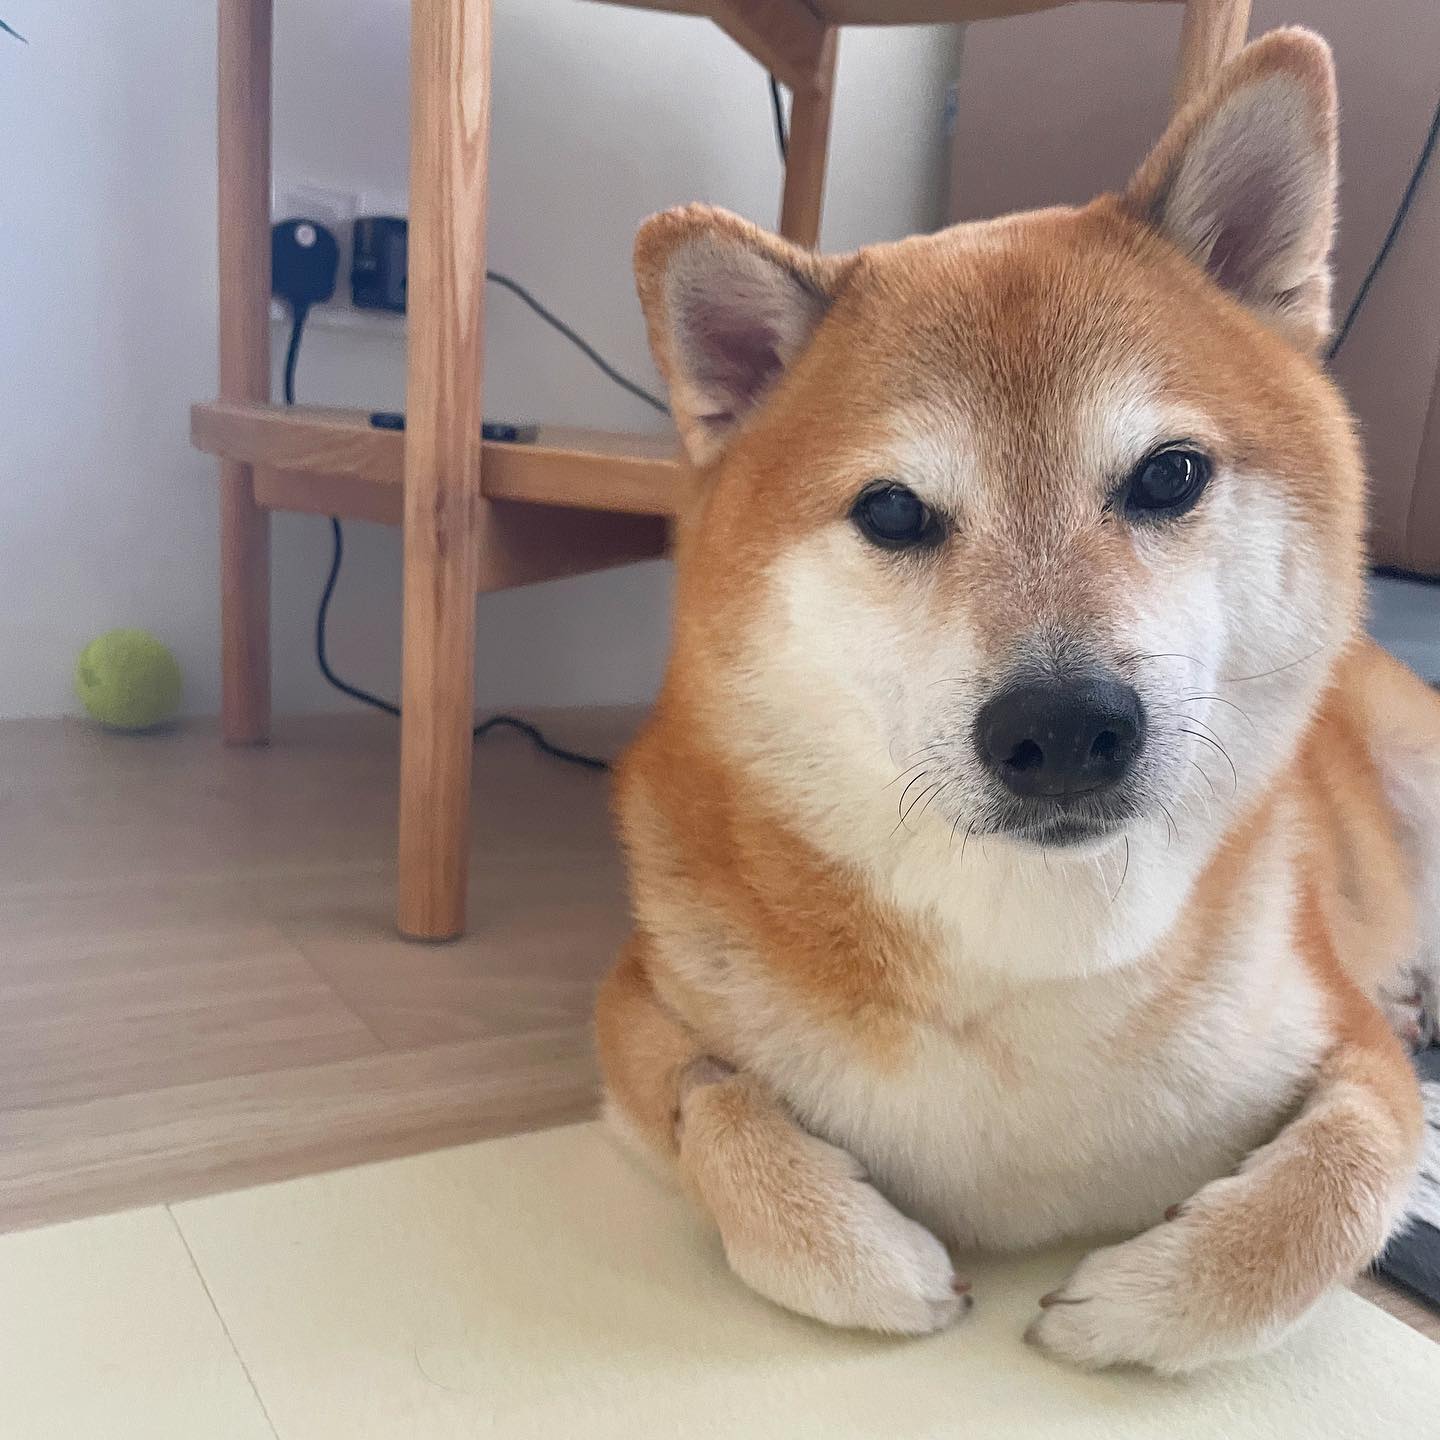 Kabosu, Dog Who Inspired Global “Doge” Meme, Is on Its Deathbed